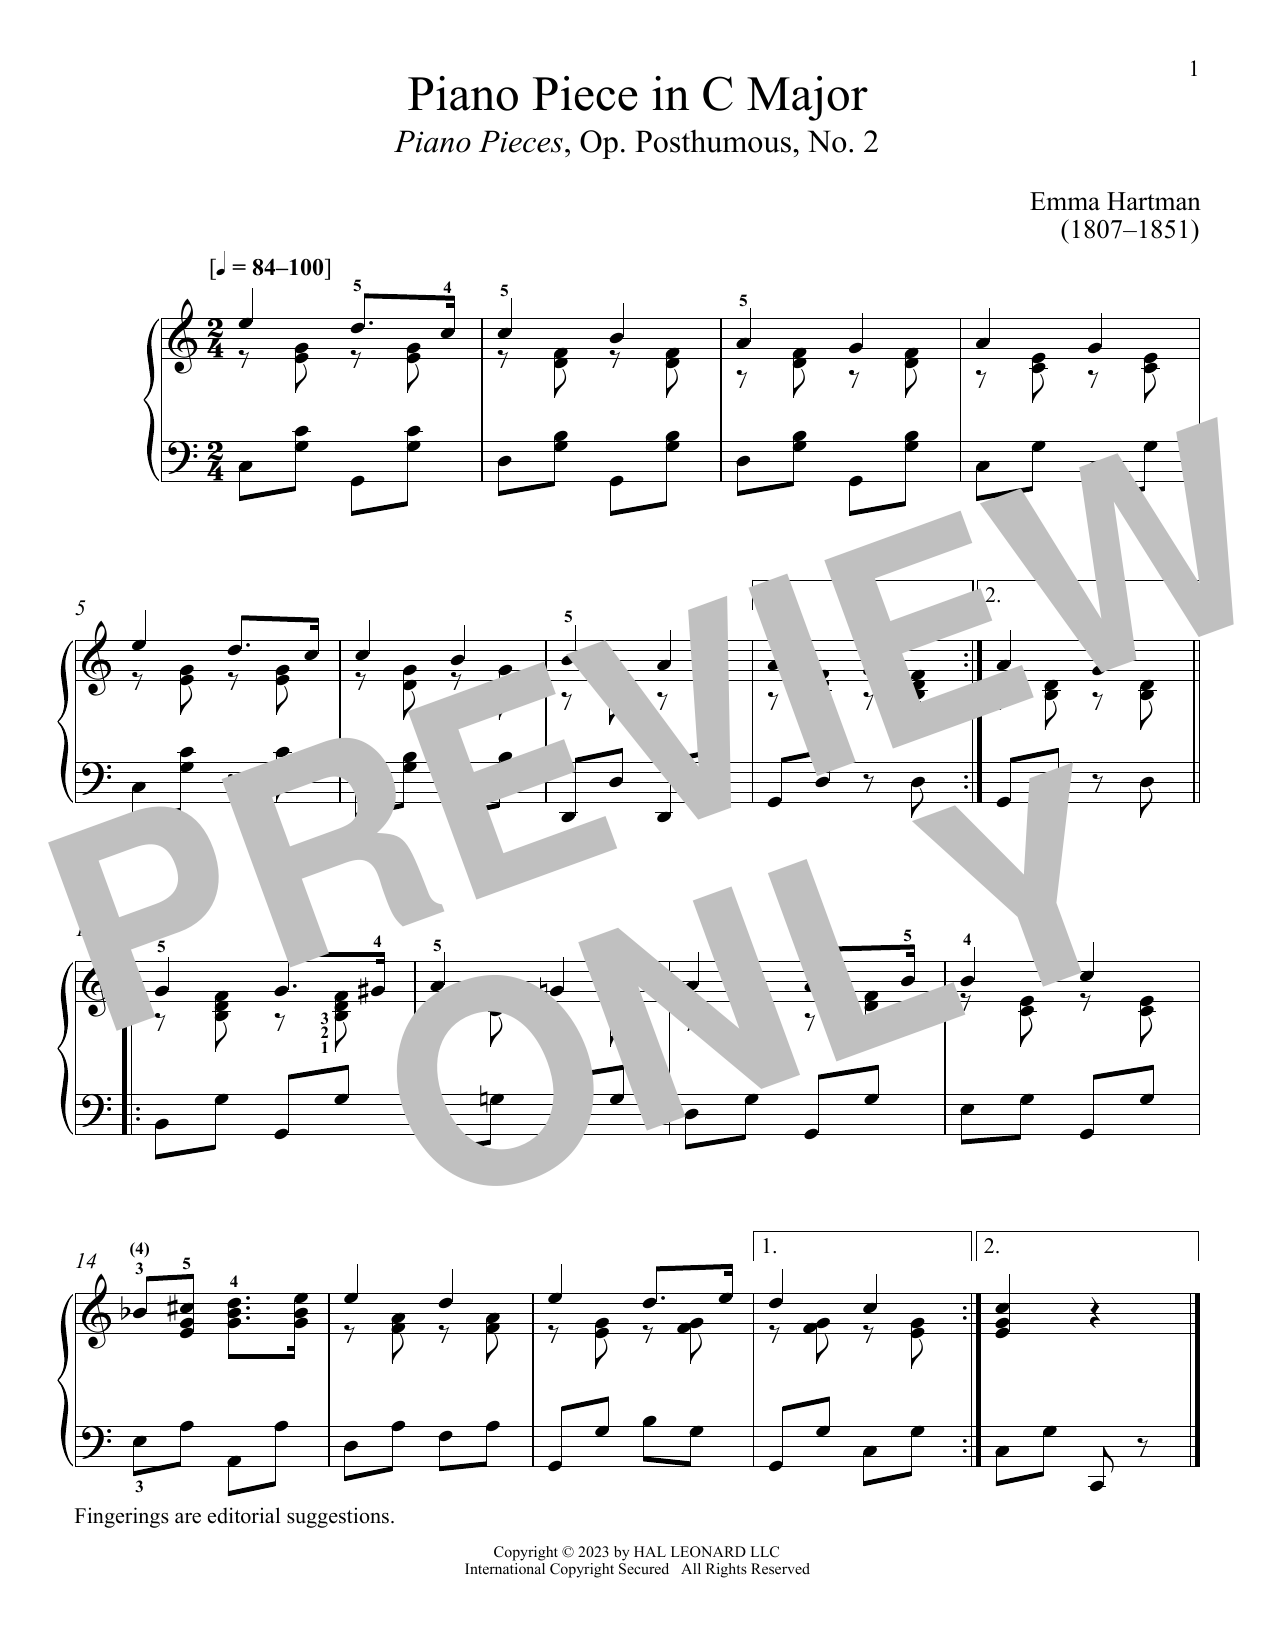 Download Emma Hartmann Piano Piece in C Major Sheet Music